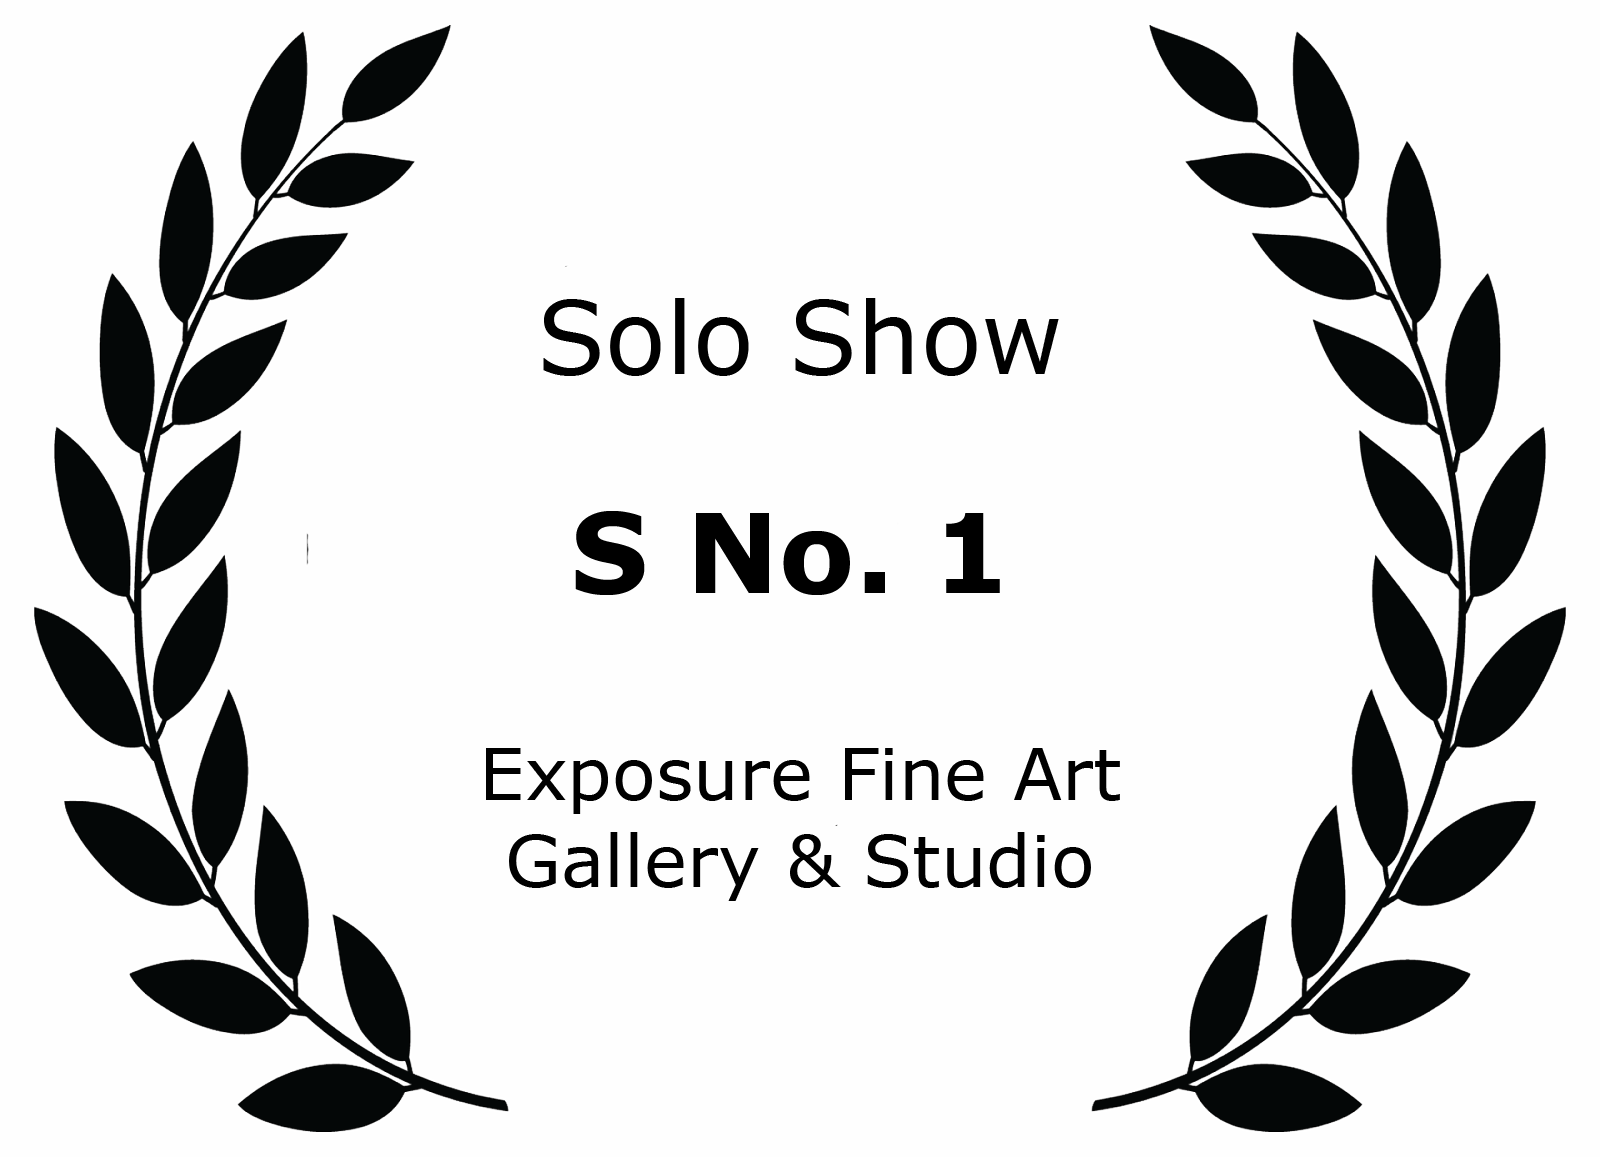 Solo Show S No. 1 Exposure Fine Art Gallery & Studio